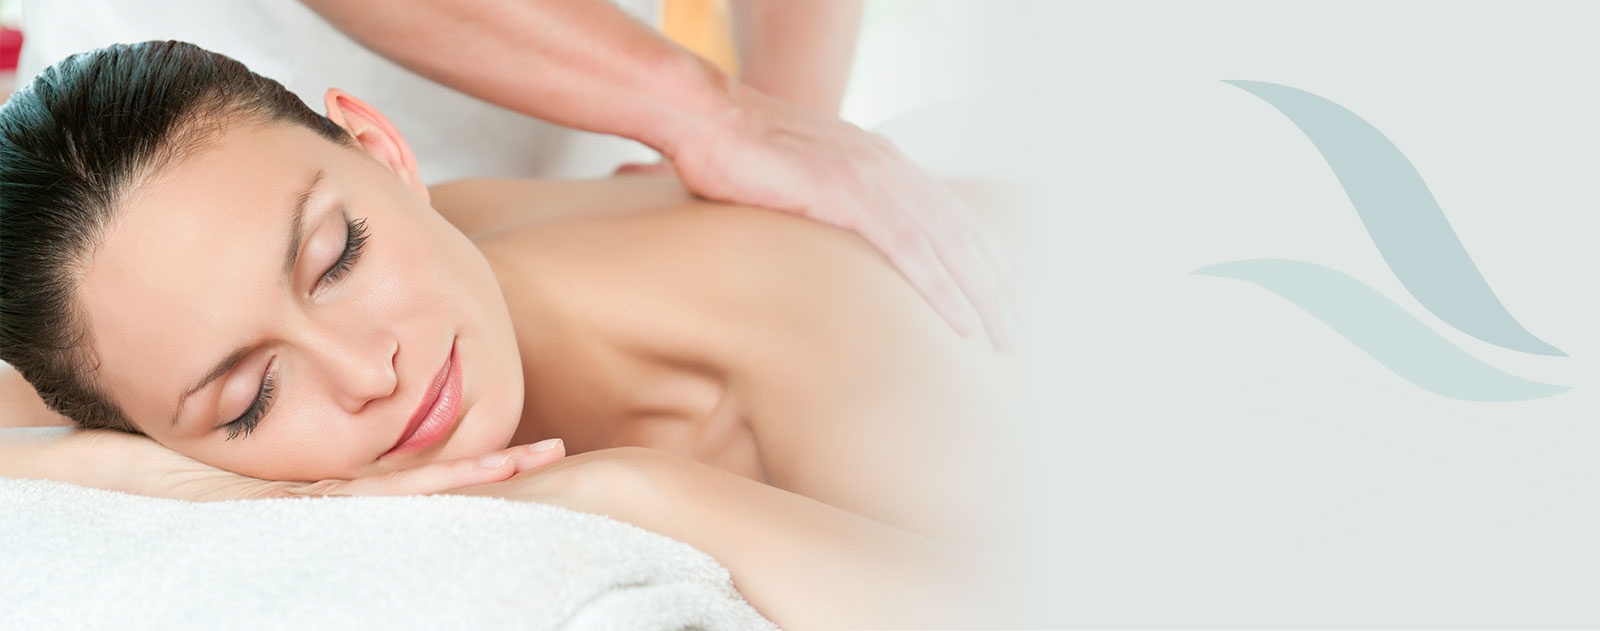 Massage Therapies by Focus Body Care - Leduc, Edmonton Massage Therapist